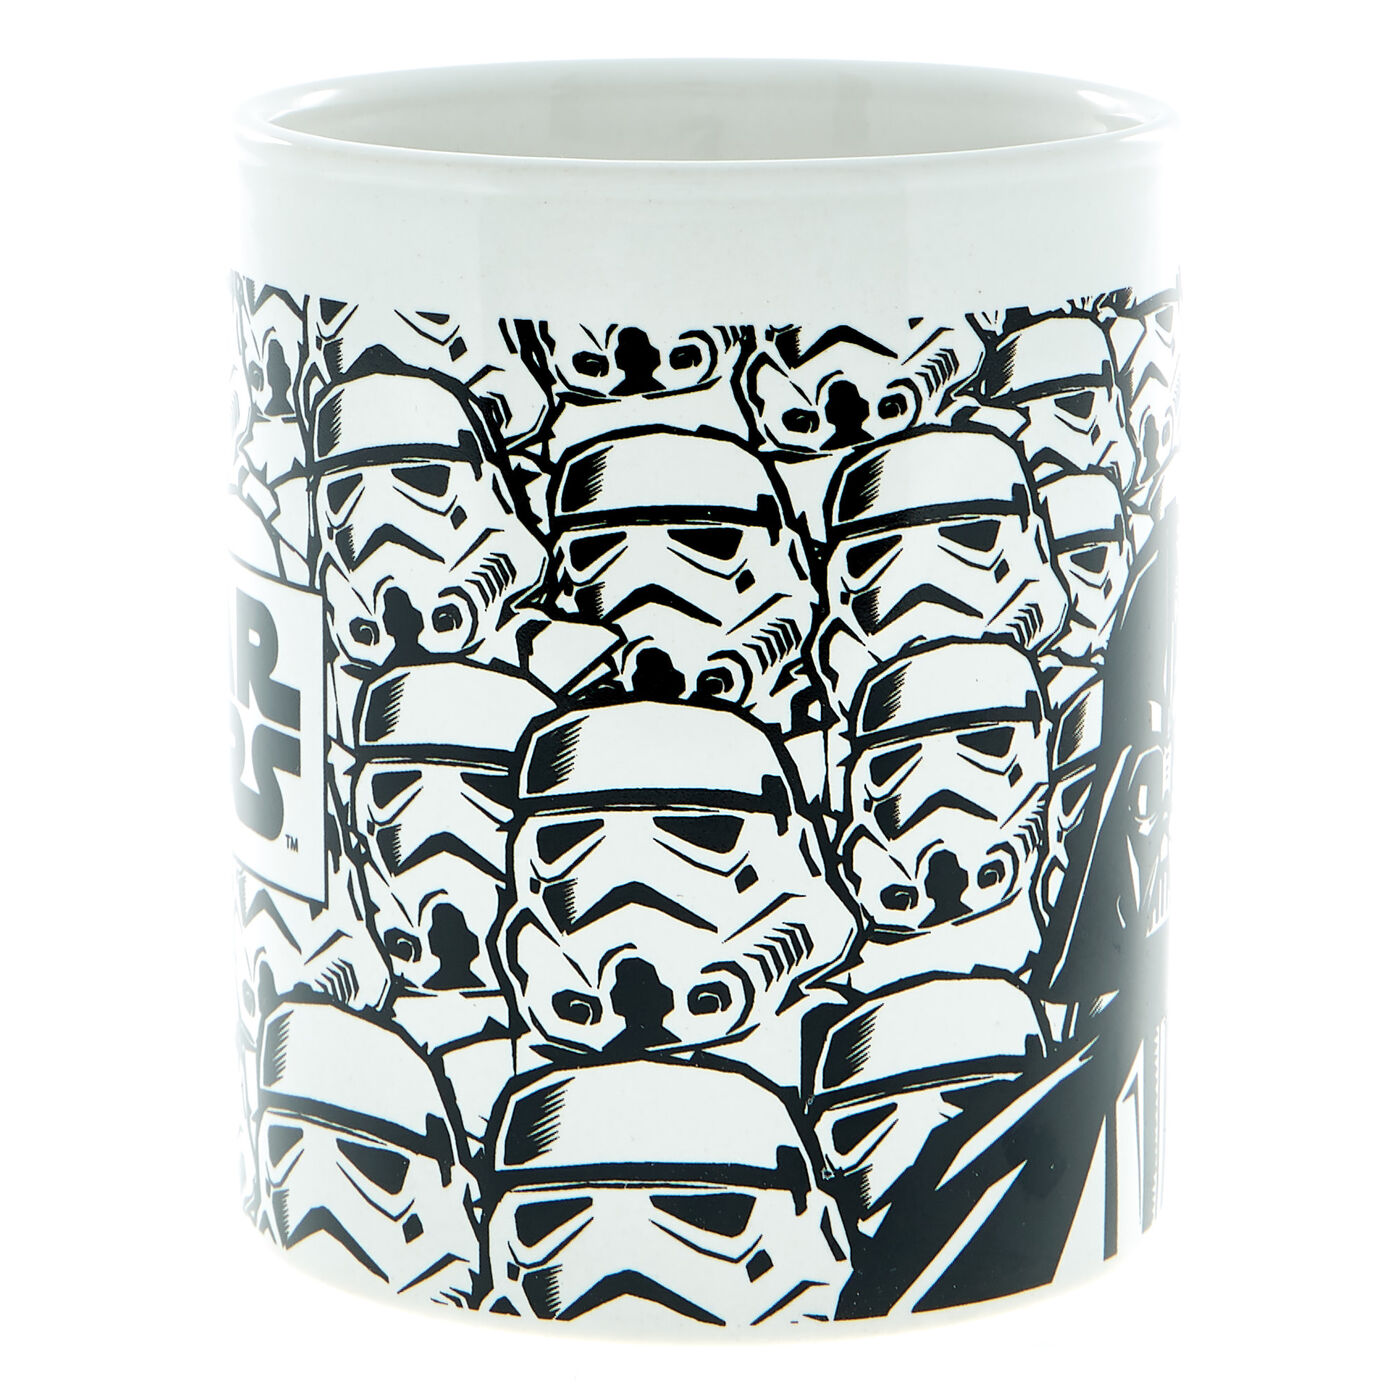 Star wars coffee mug set Pair of cups